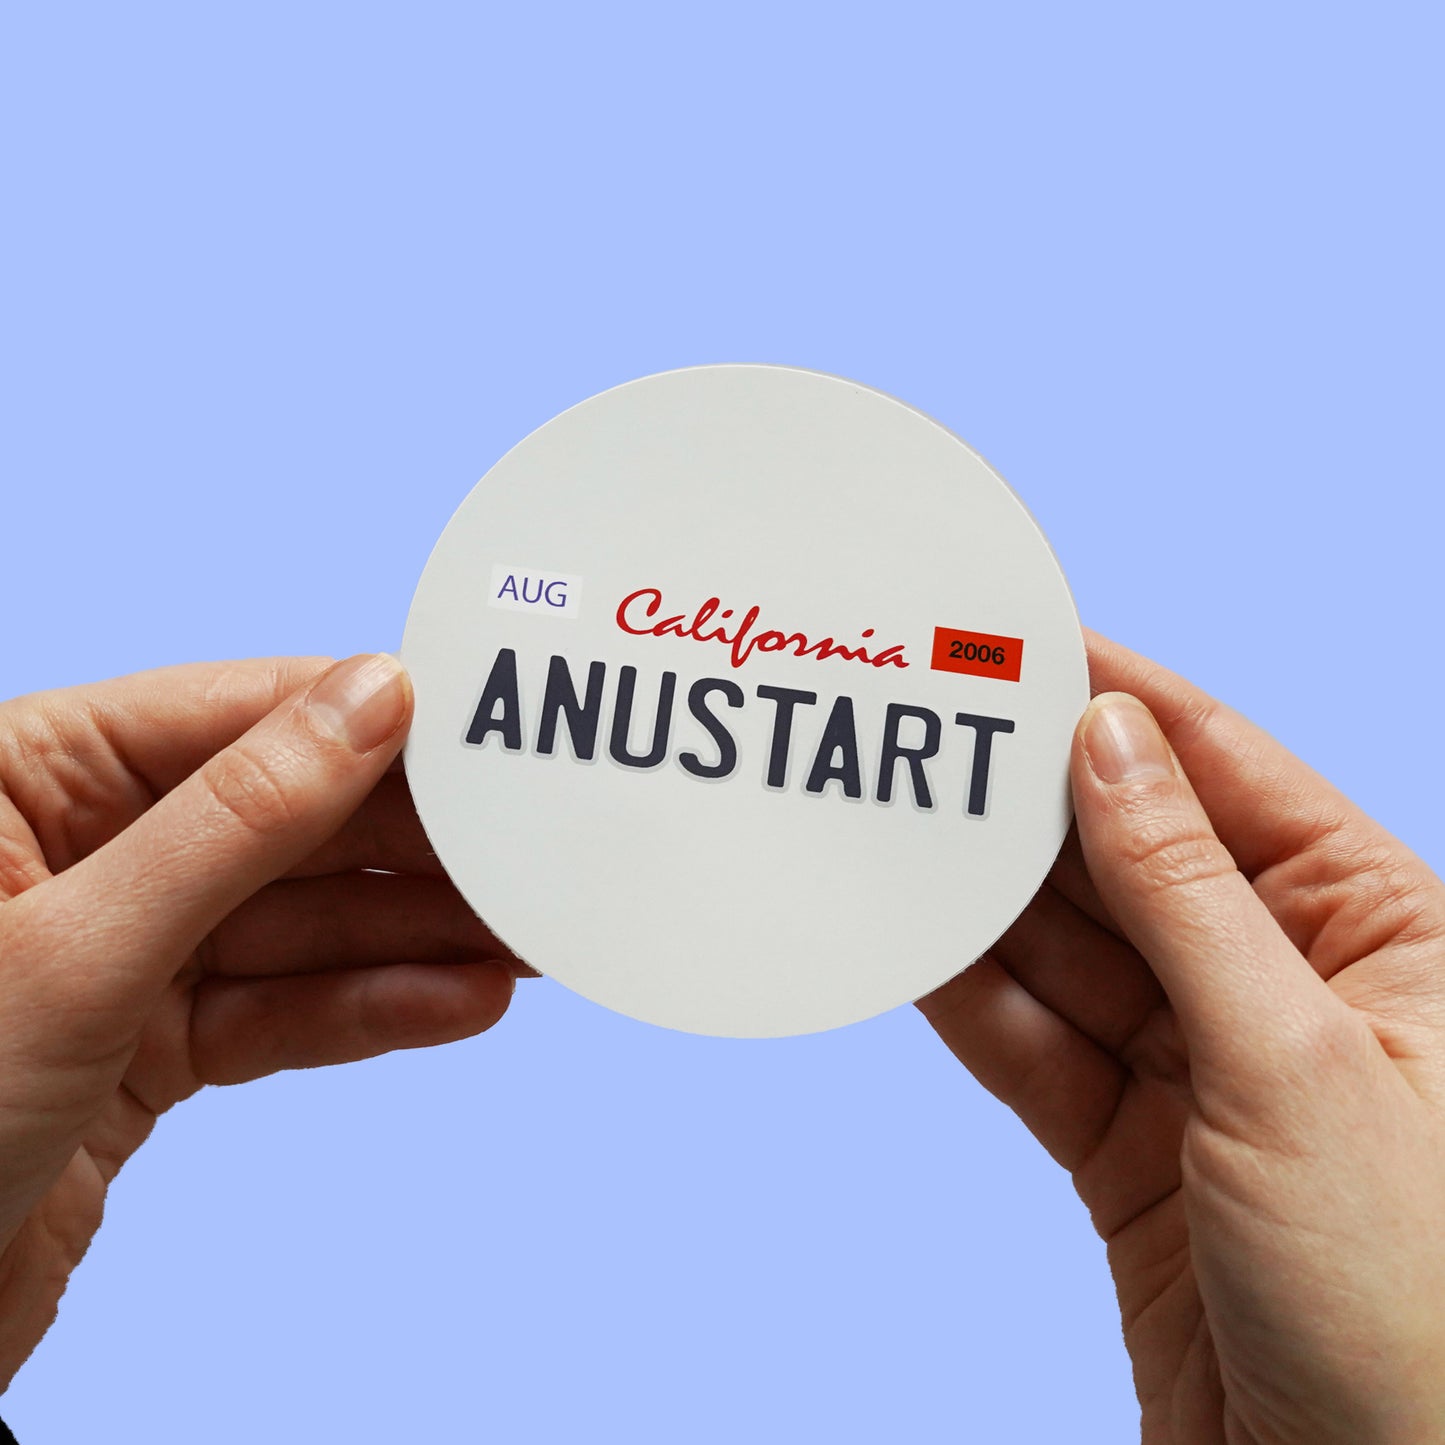 Arrested Development "ANUSTART" Sticker